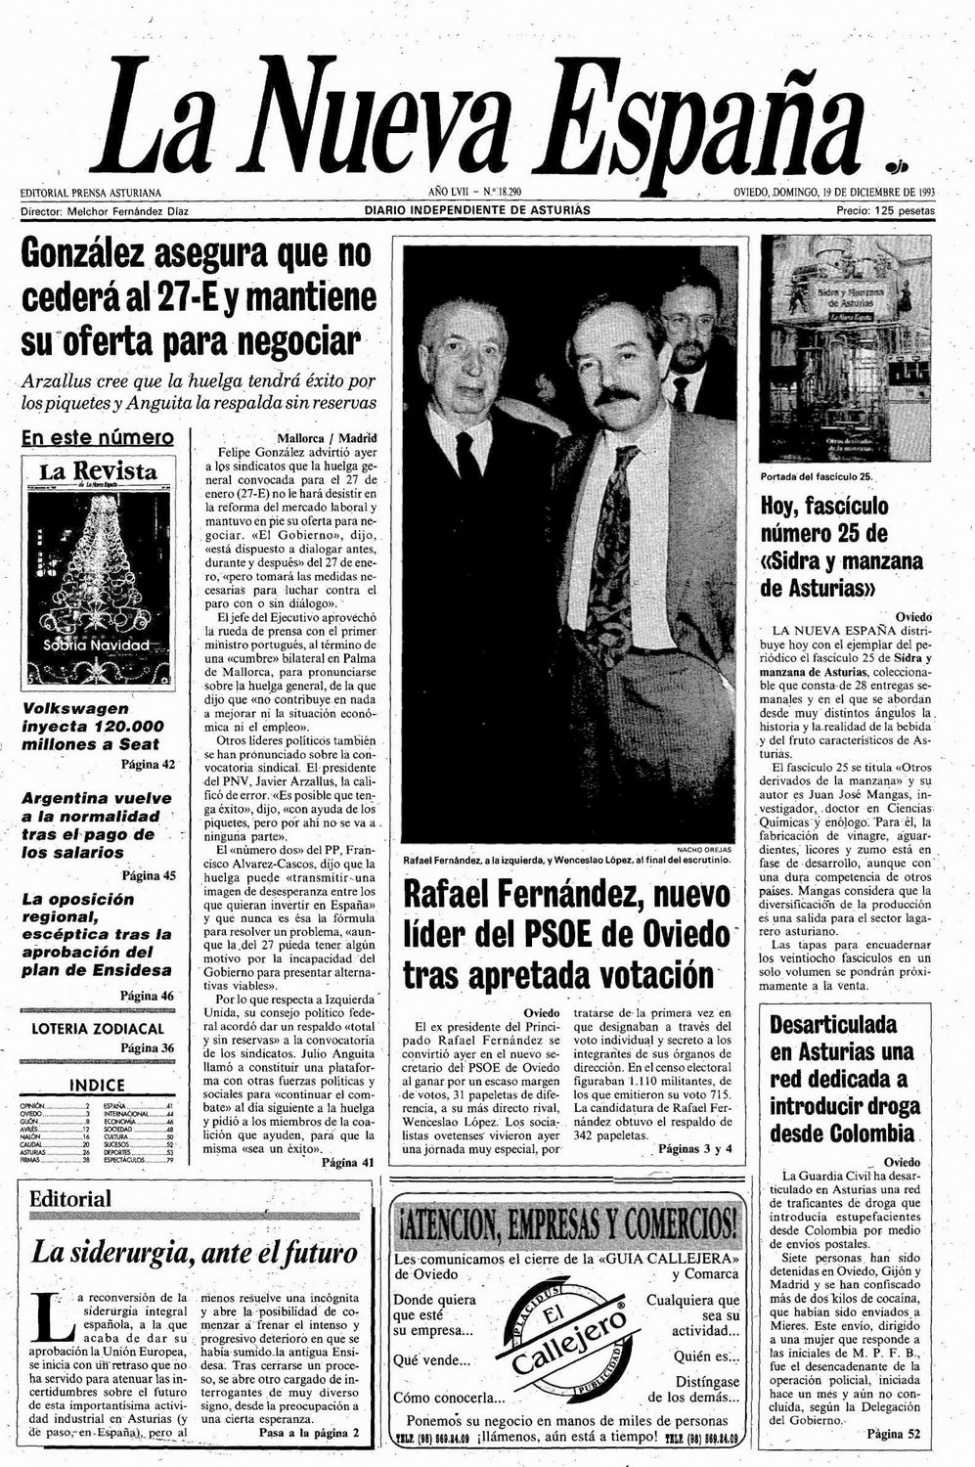 Portada del Domingo, 19 de Diciembre de 1993